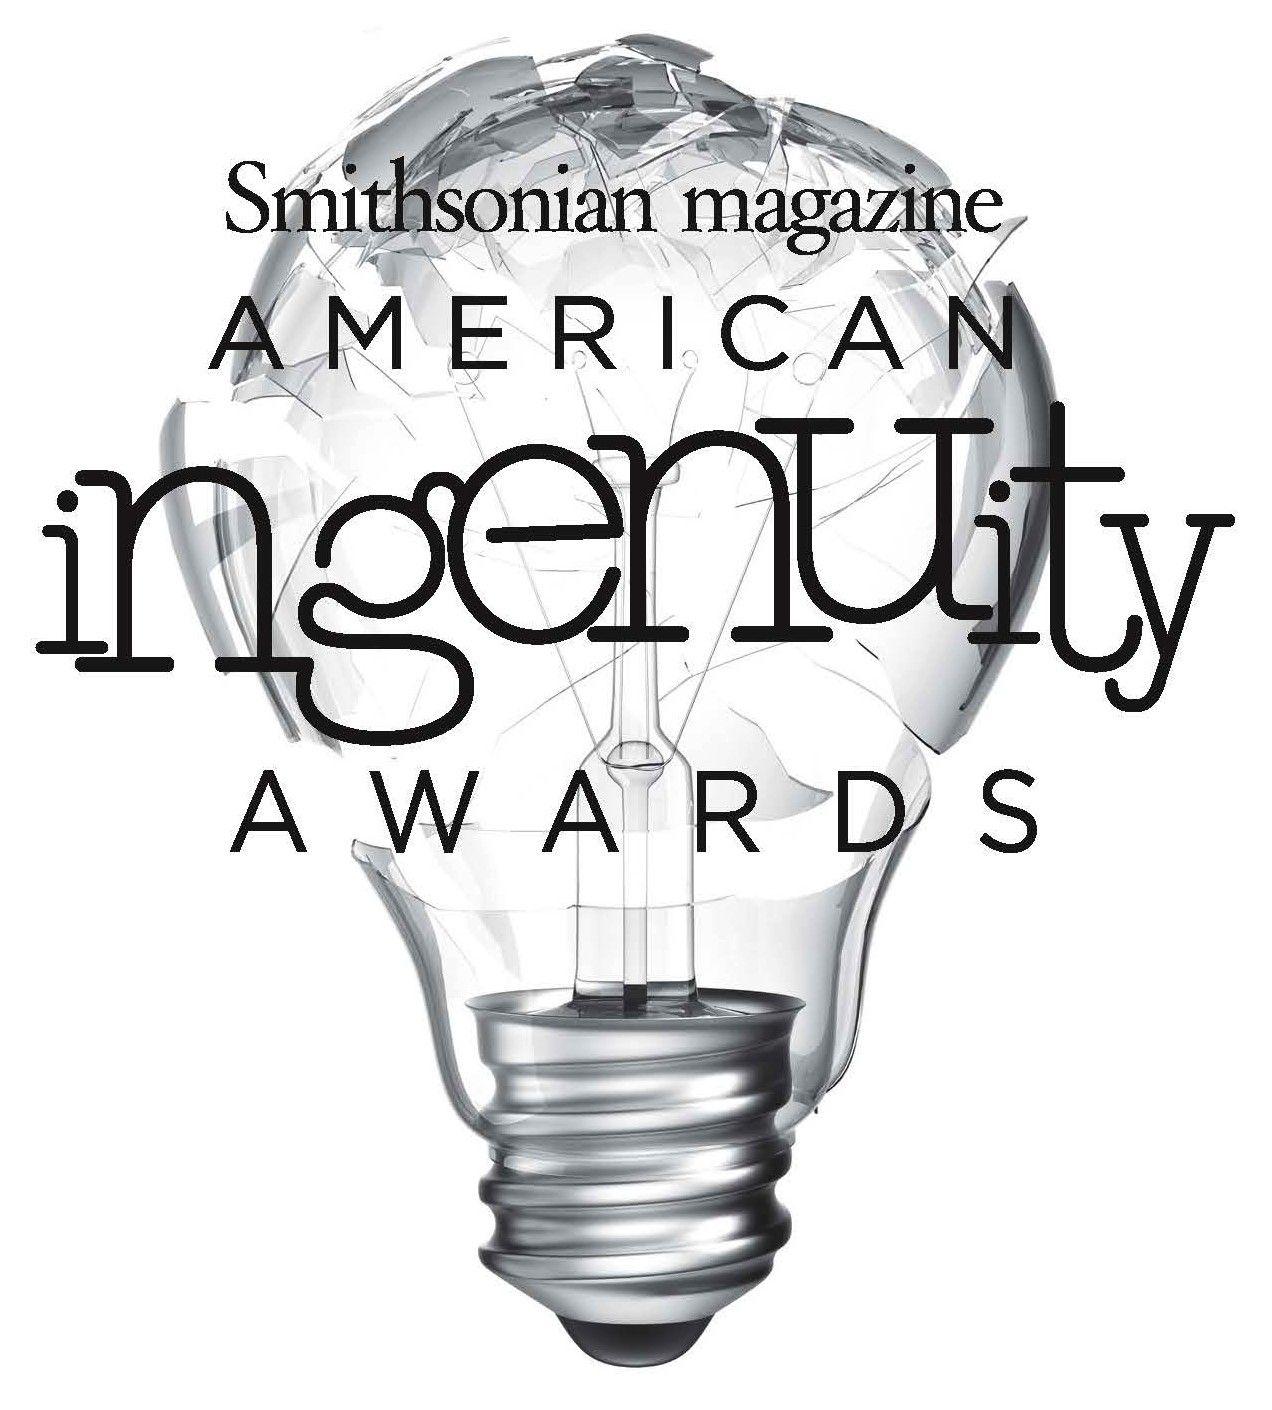 Ingenuity Logo - Smithsonian Announces the 2017 “American Ingenuity Awards” Winners